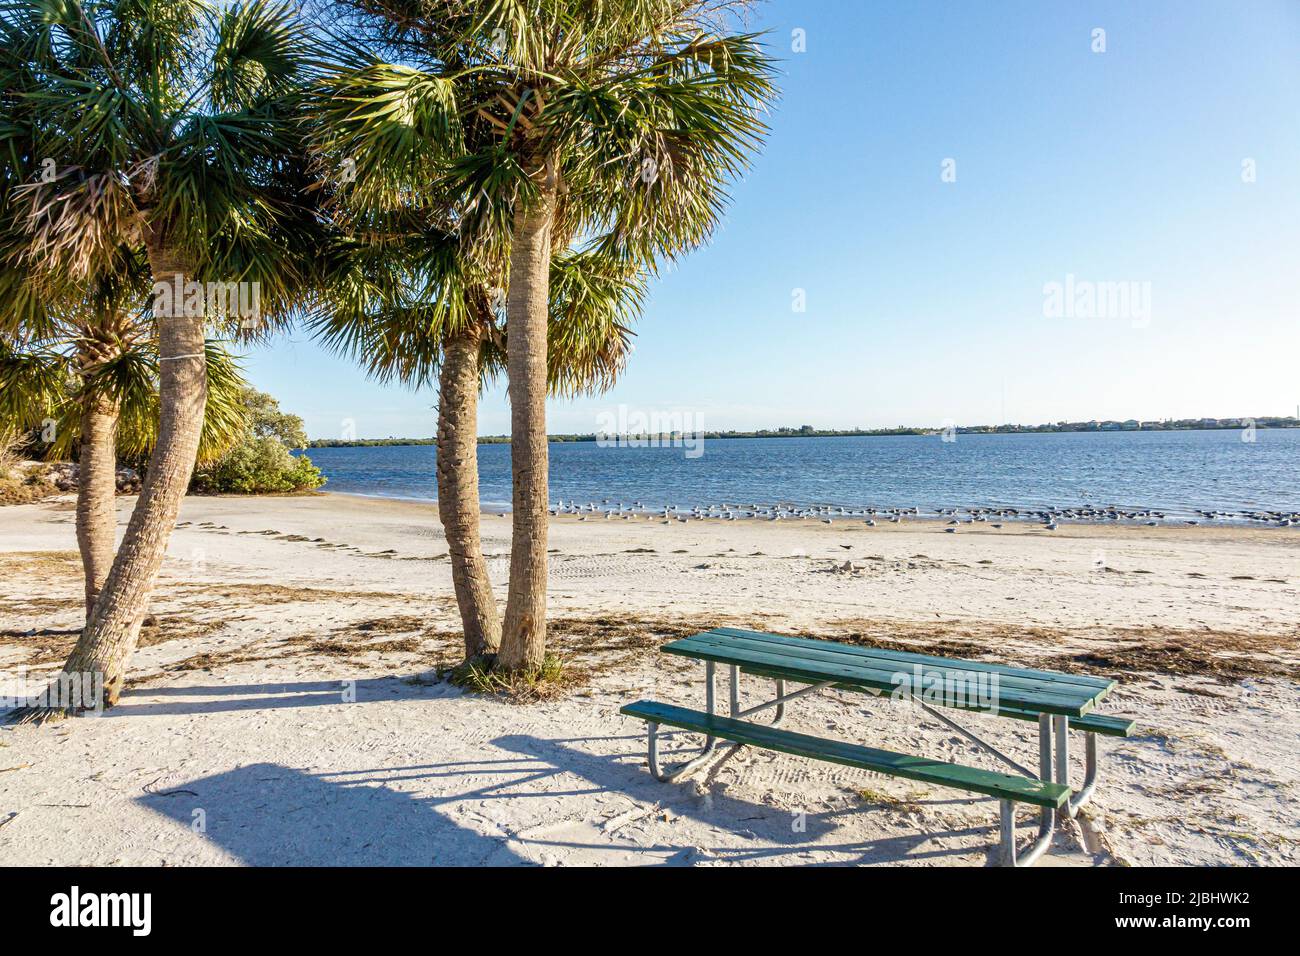 Florida New Port Richey, Green Key, Robert K Rees Memorial Park, Golfo de México, playa pública arena sabal palmeras palmeras palmeras Foto de stock